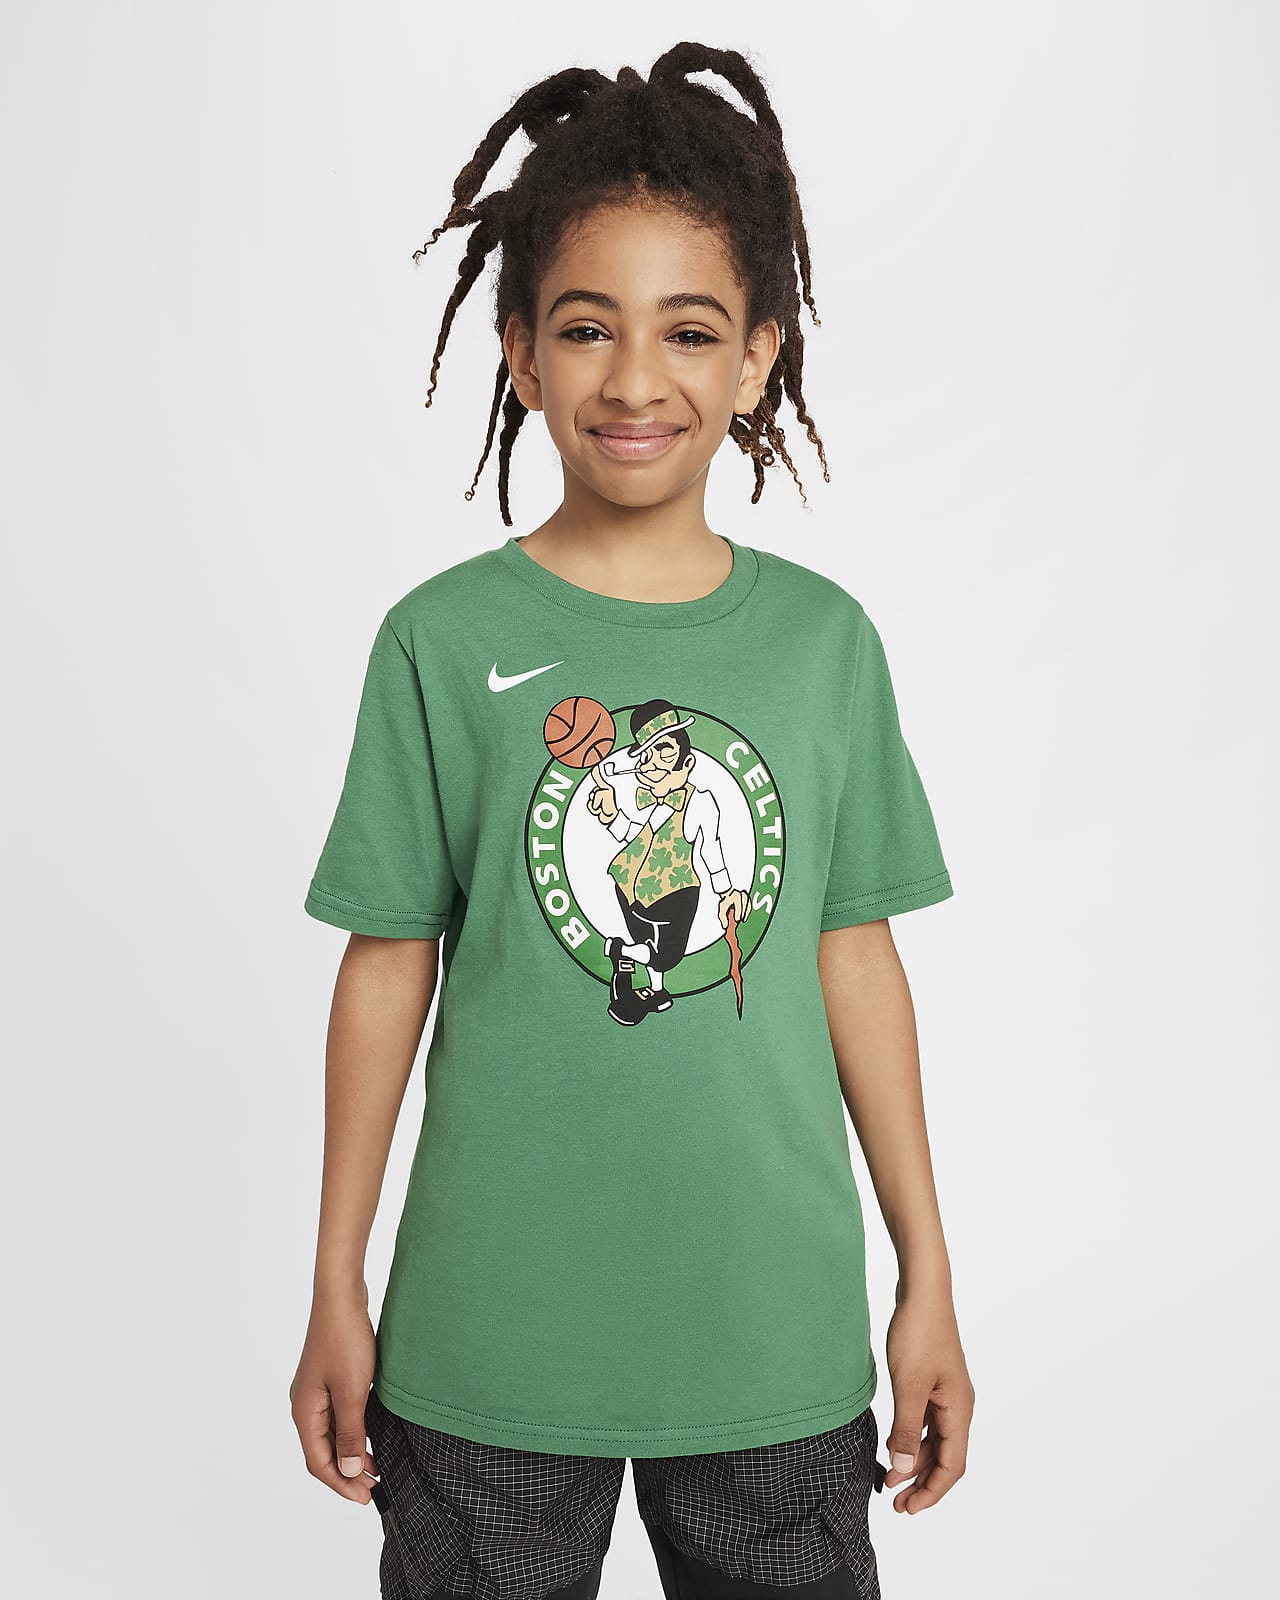 Boston Celtics Essential Older Kids' (Boys') Nike NBA Logo T-Shirt